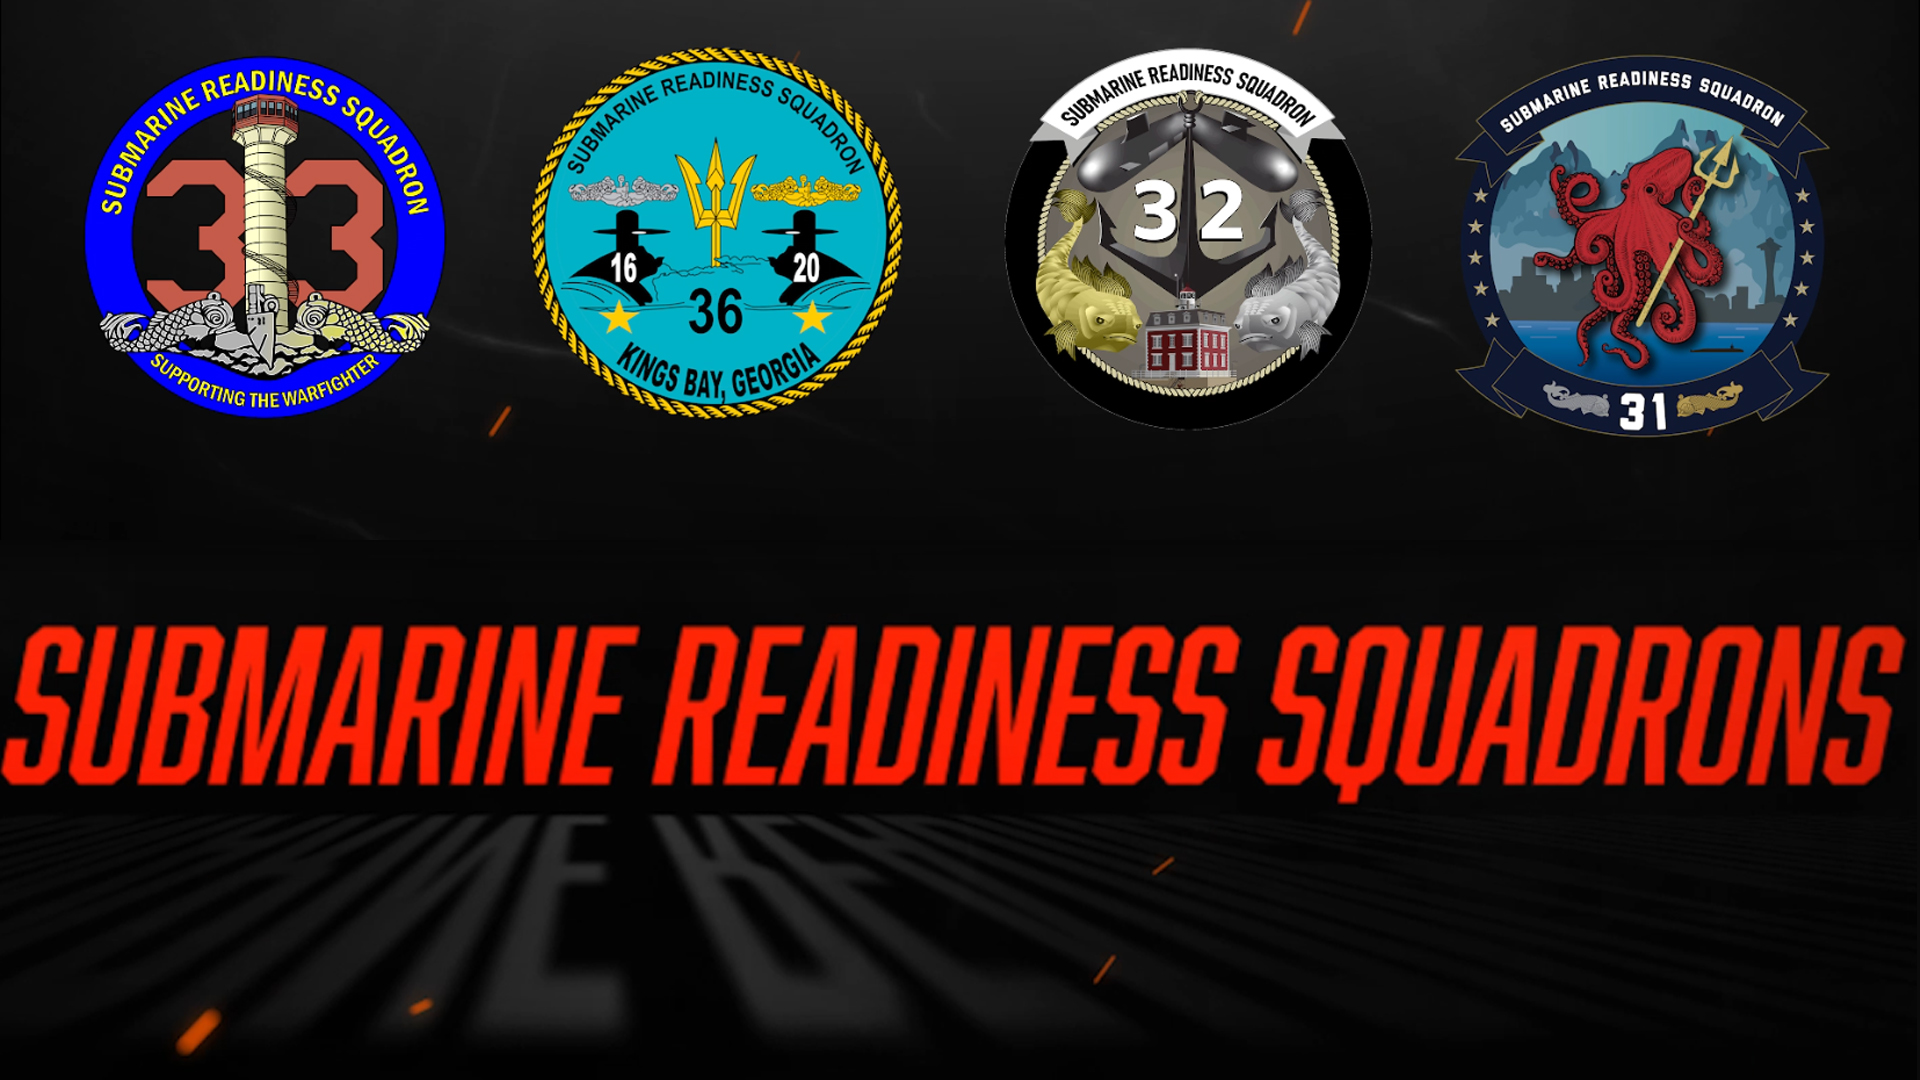 U.S. Navy Submarine Force Announces Submarine Readiness Squadrons